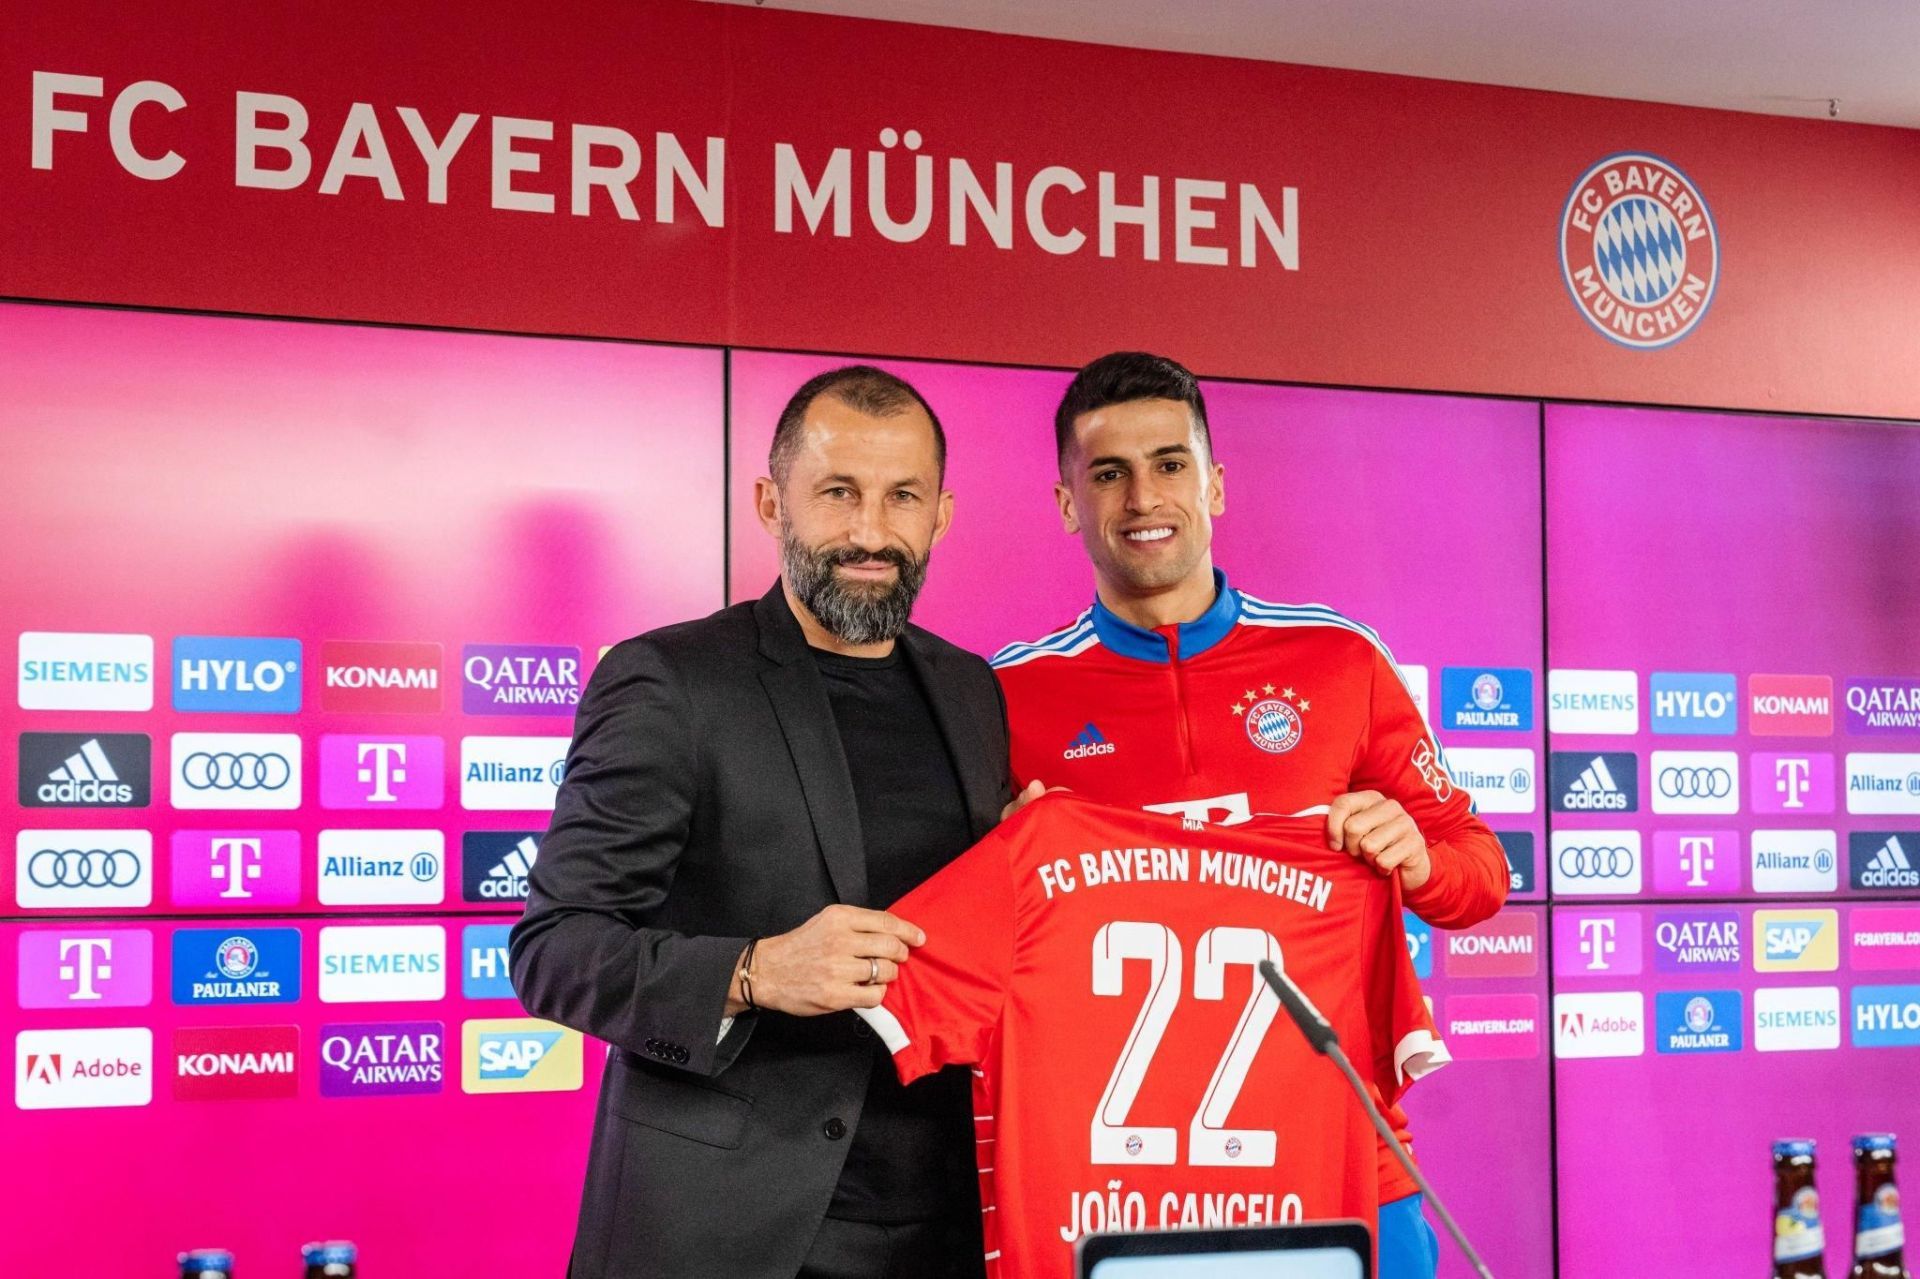 Joao Cancelo signs for Bayern Munich on loan (credits; Fabrizio Romano)